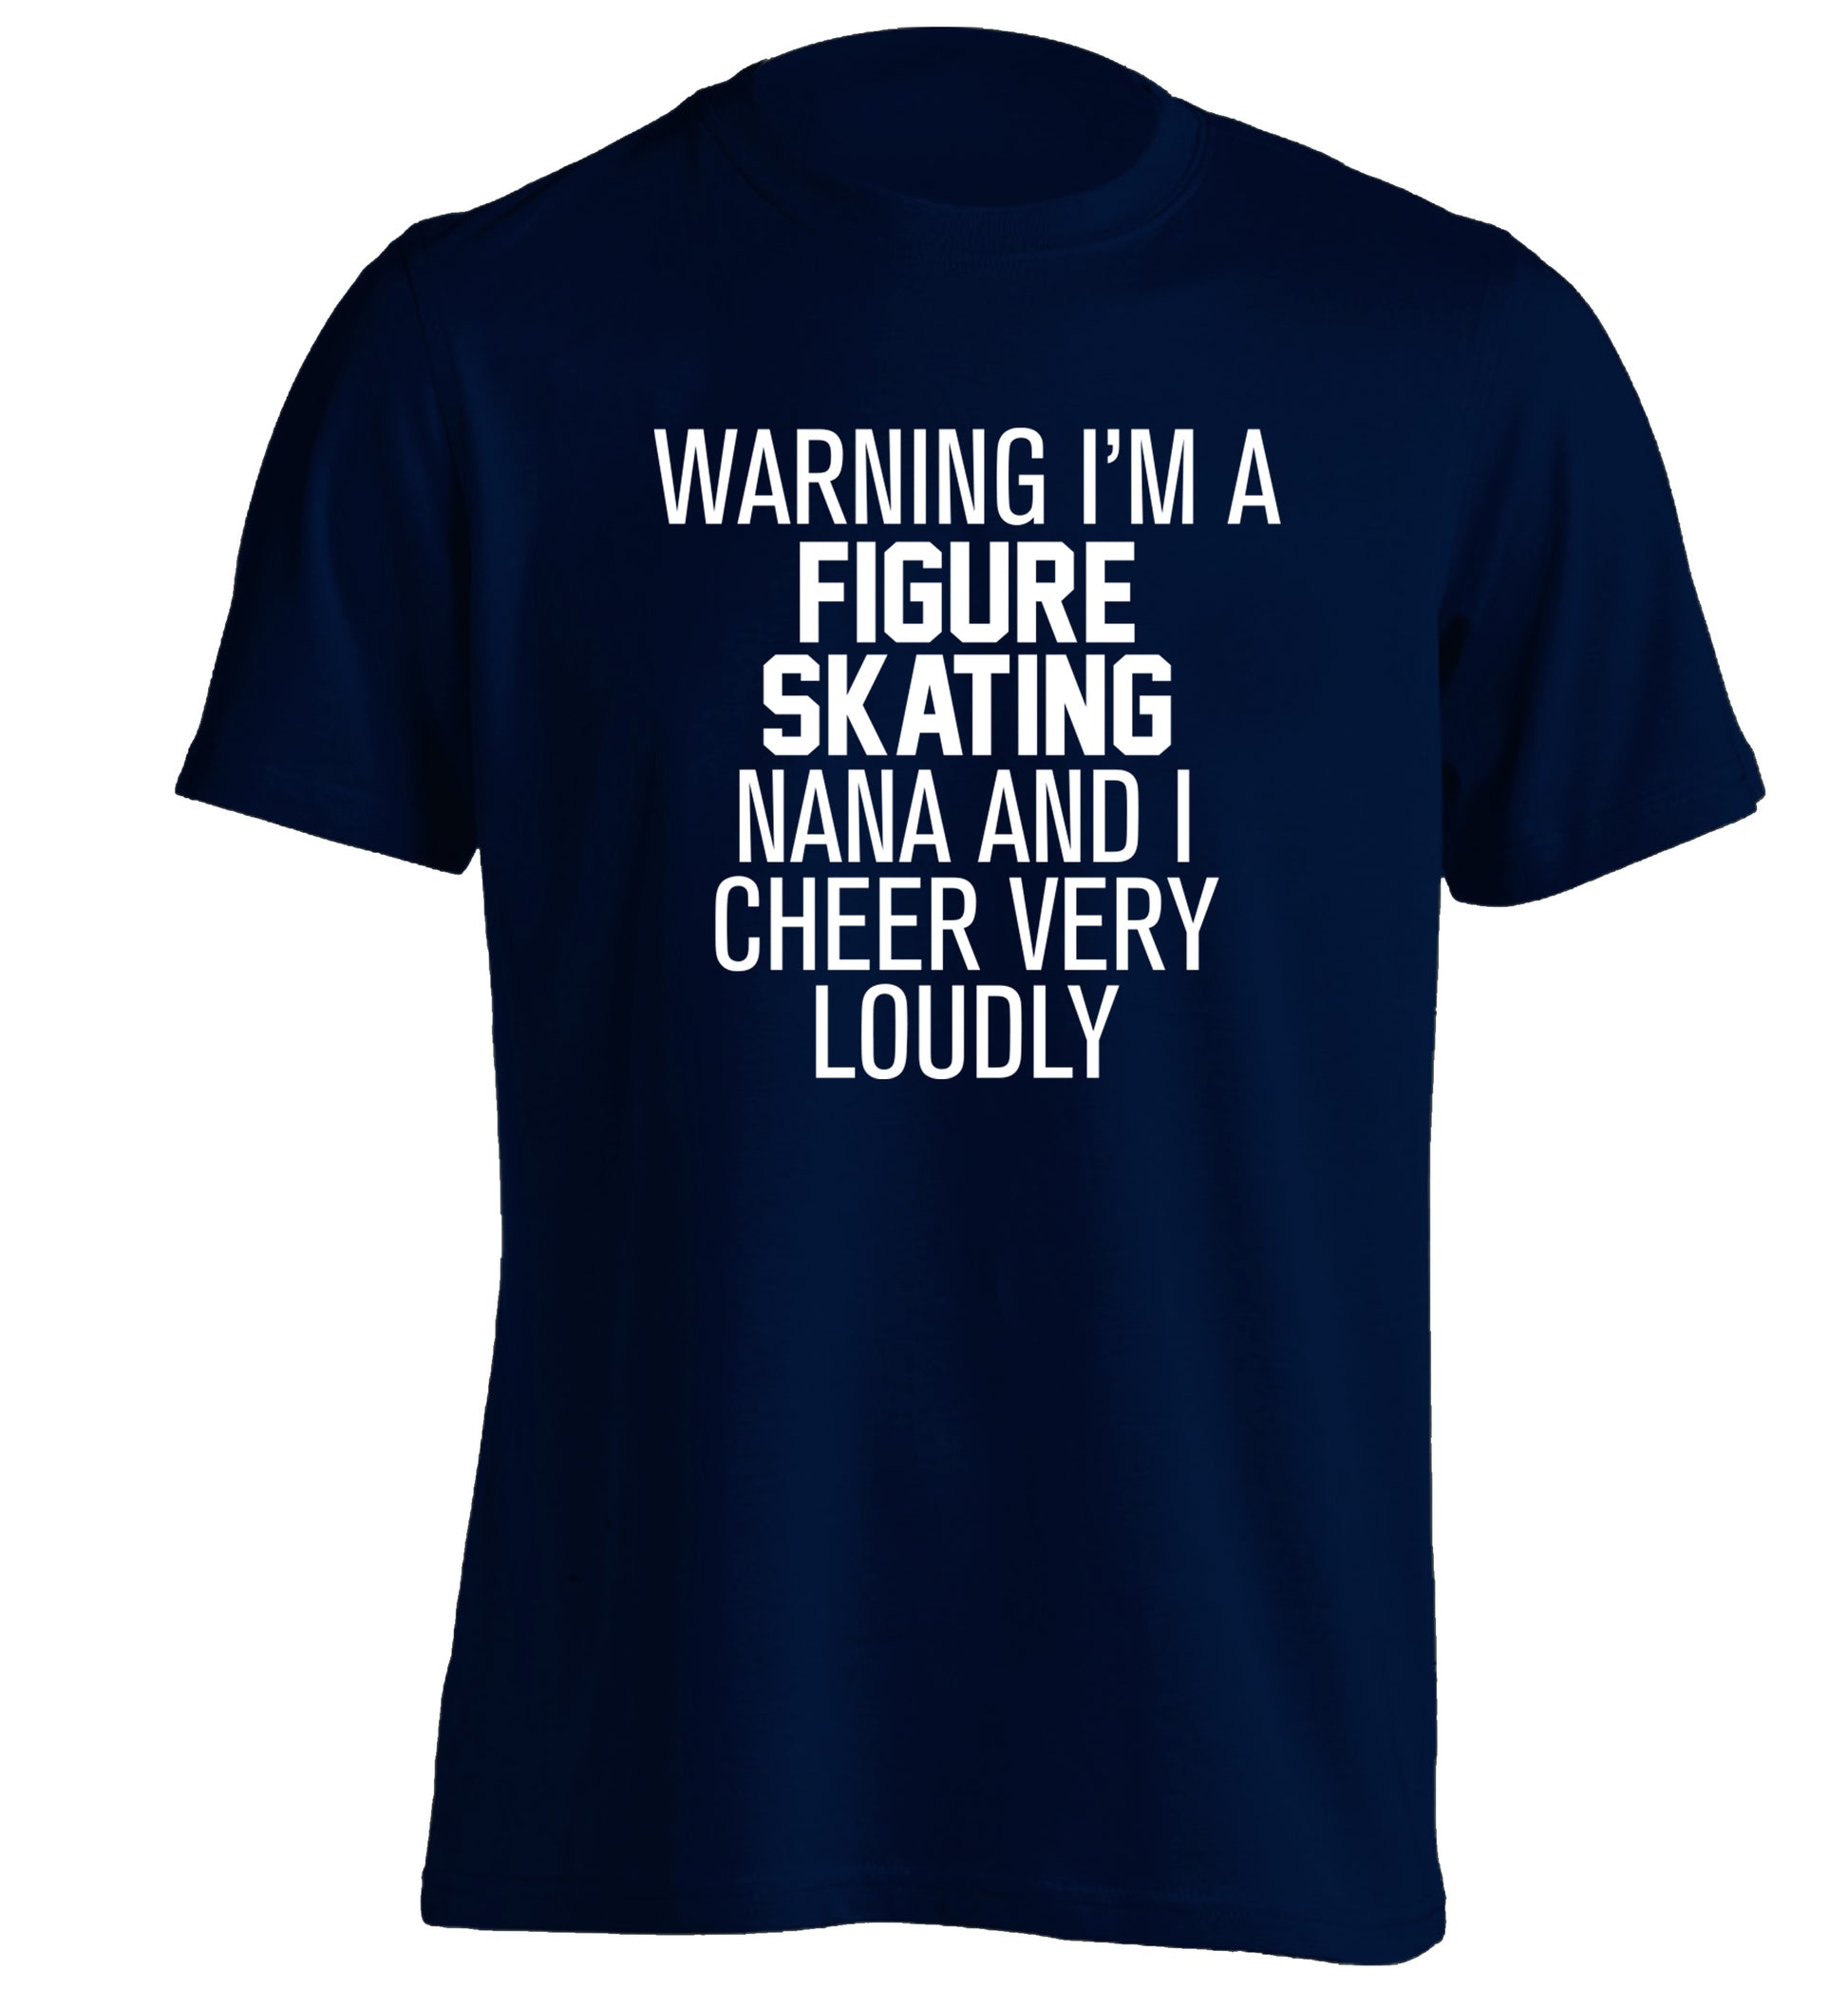 Warning I'm a figure skating nana and I cheer very loudly adults unisexnavy Tshirt 2XL